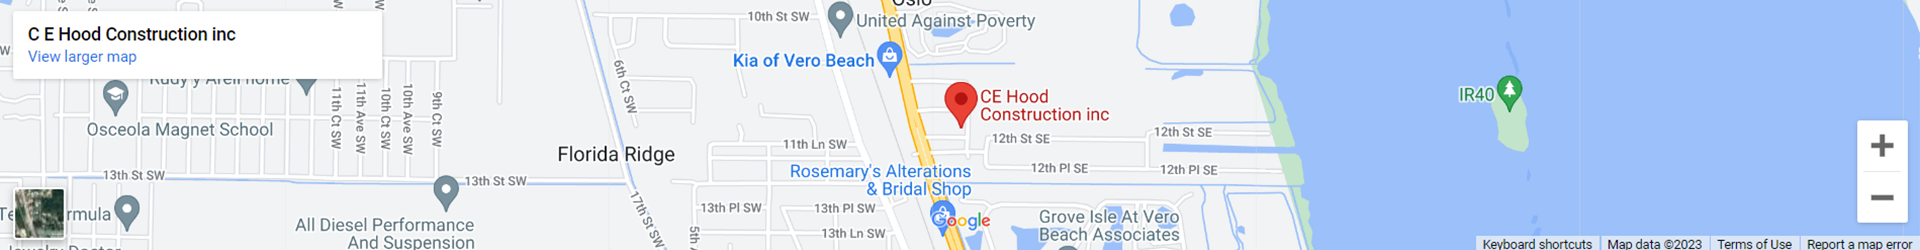 CE Hood Construction INC.